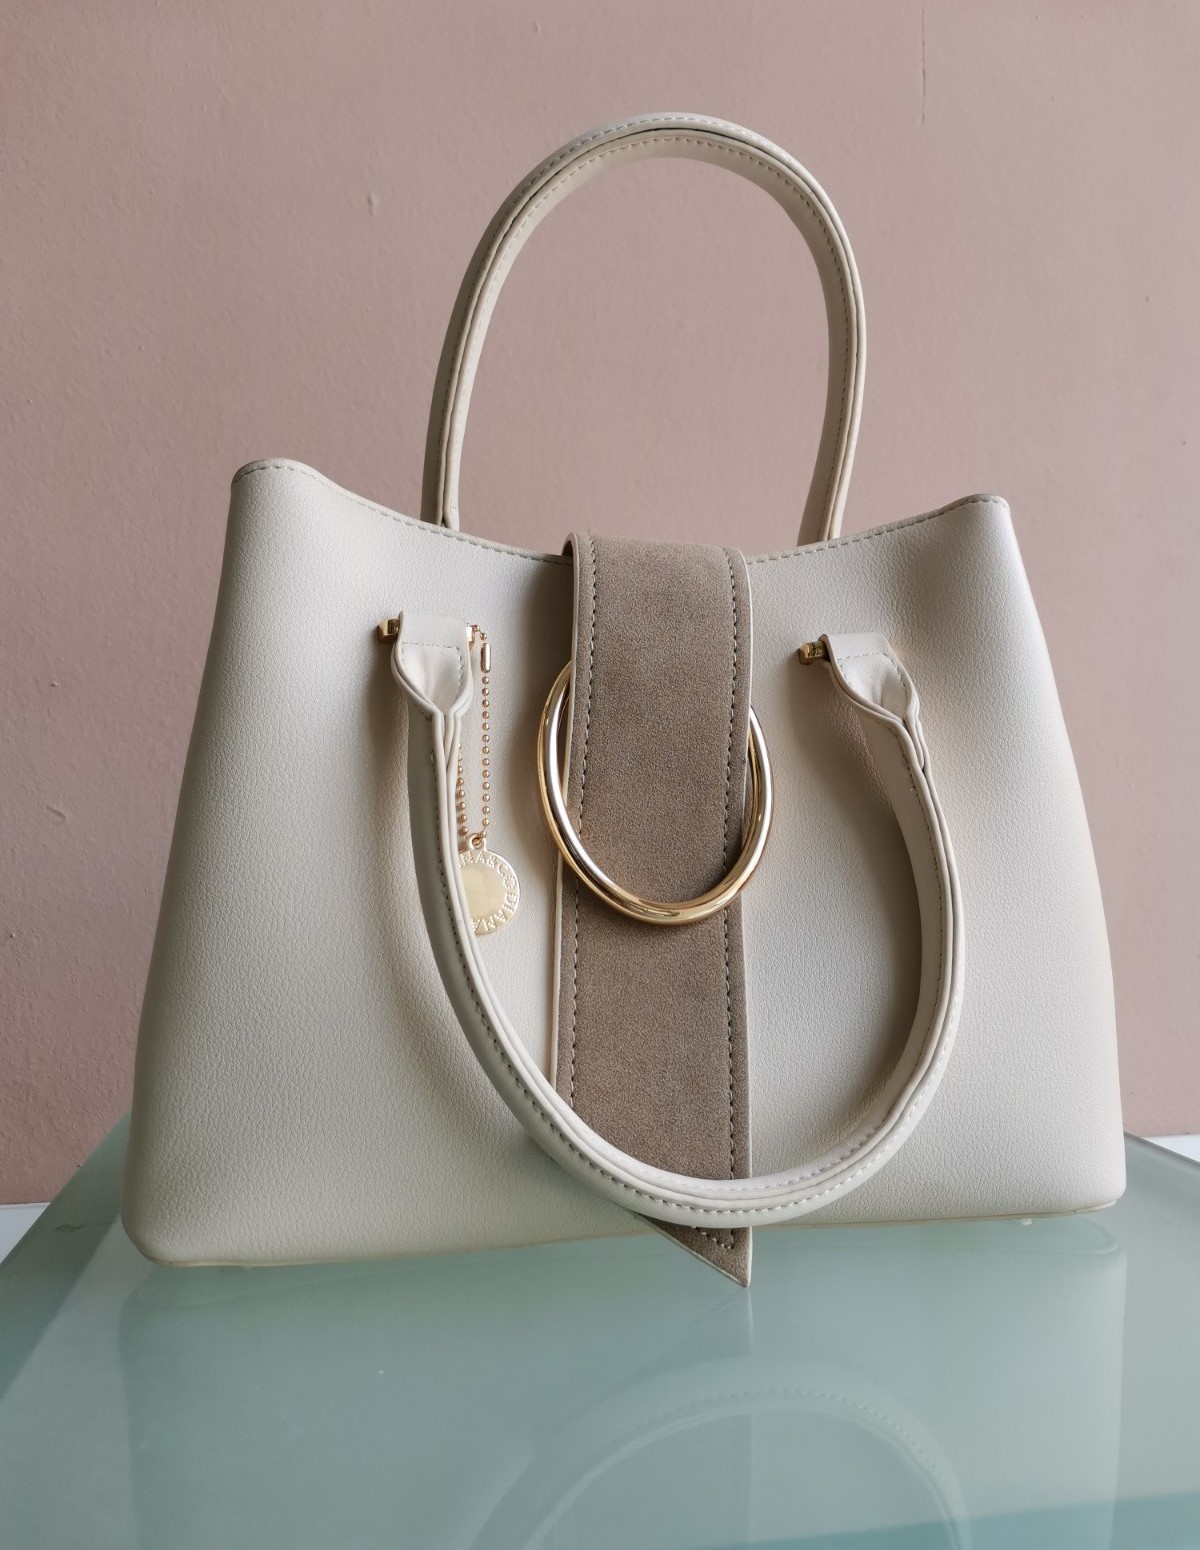 Handbag with Strap in beige